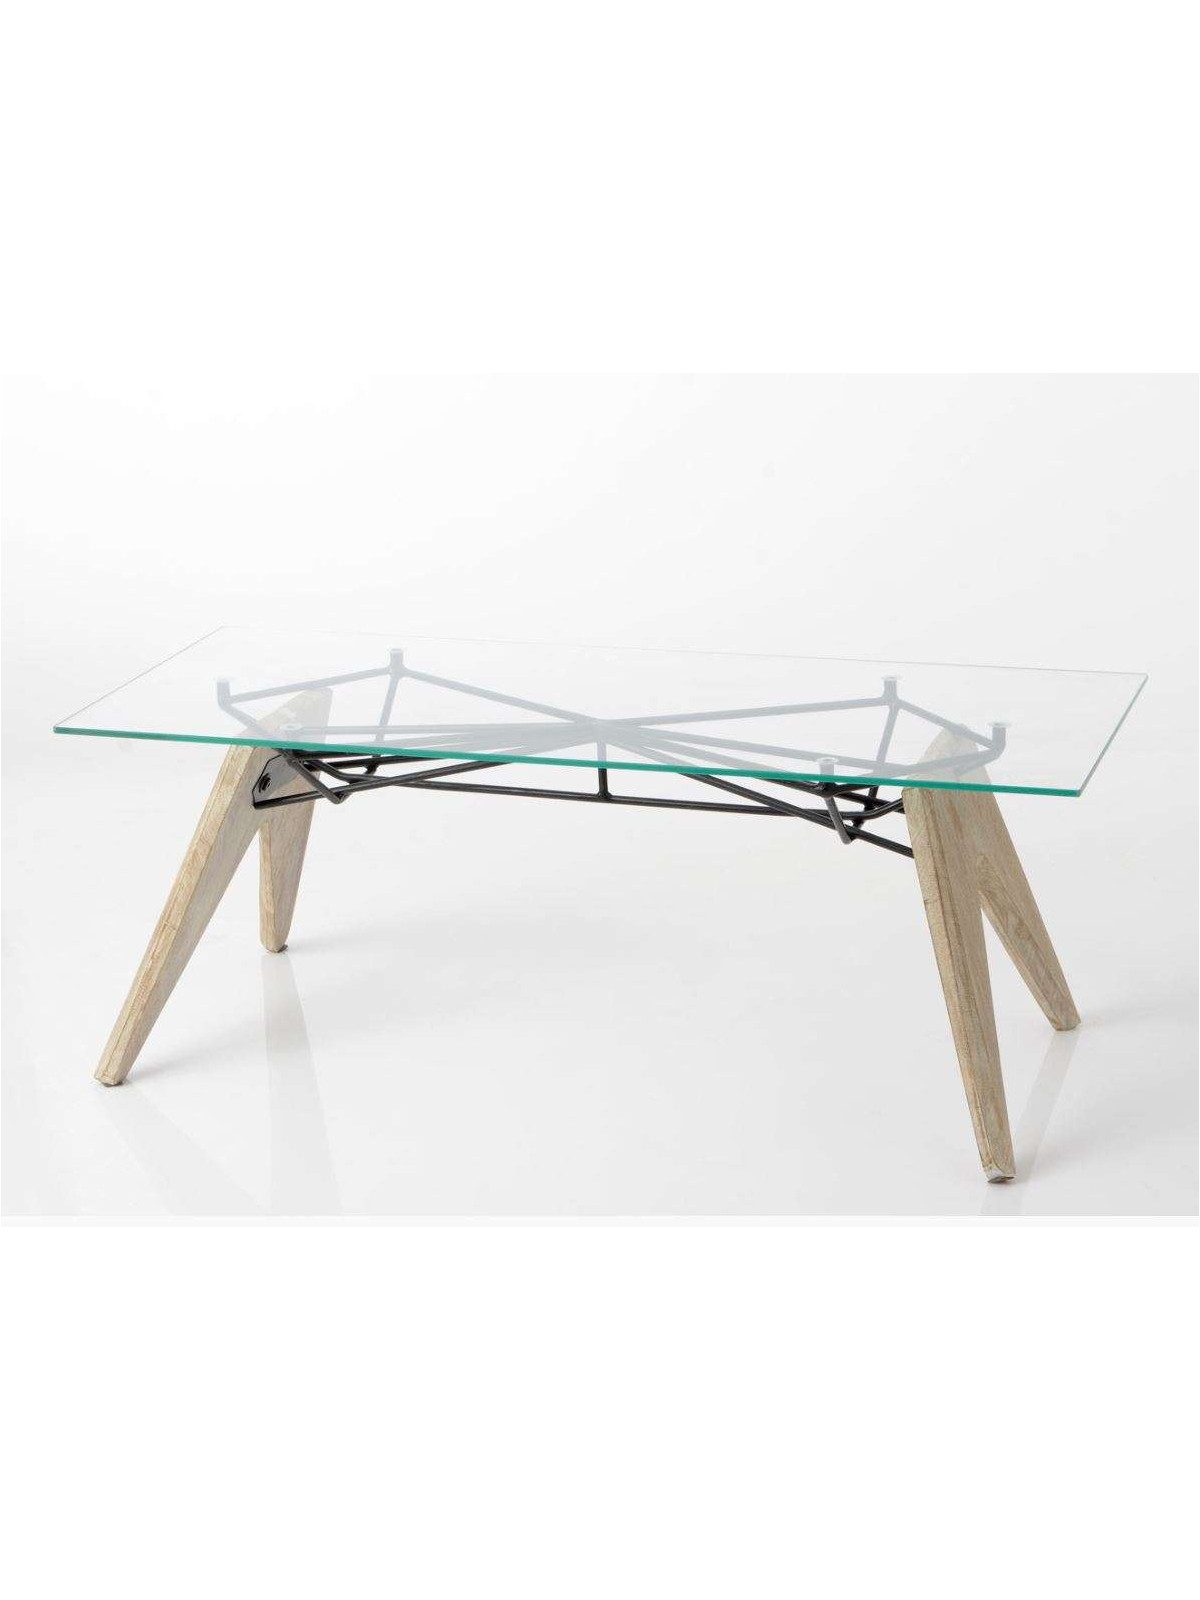 Table salon contemporaine structurale